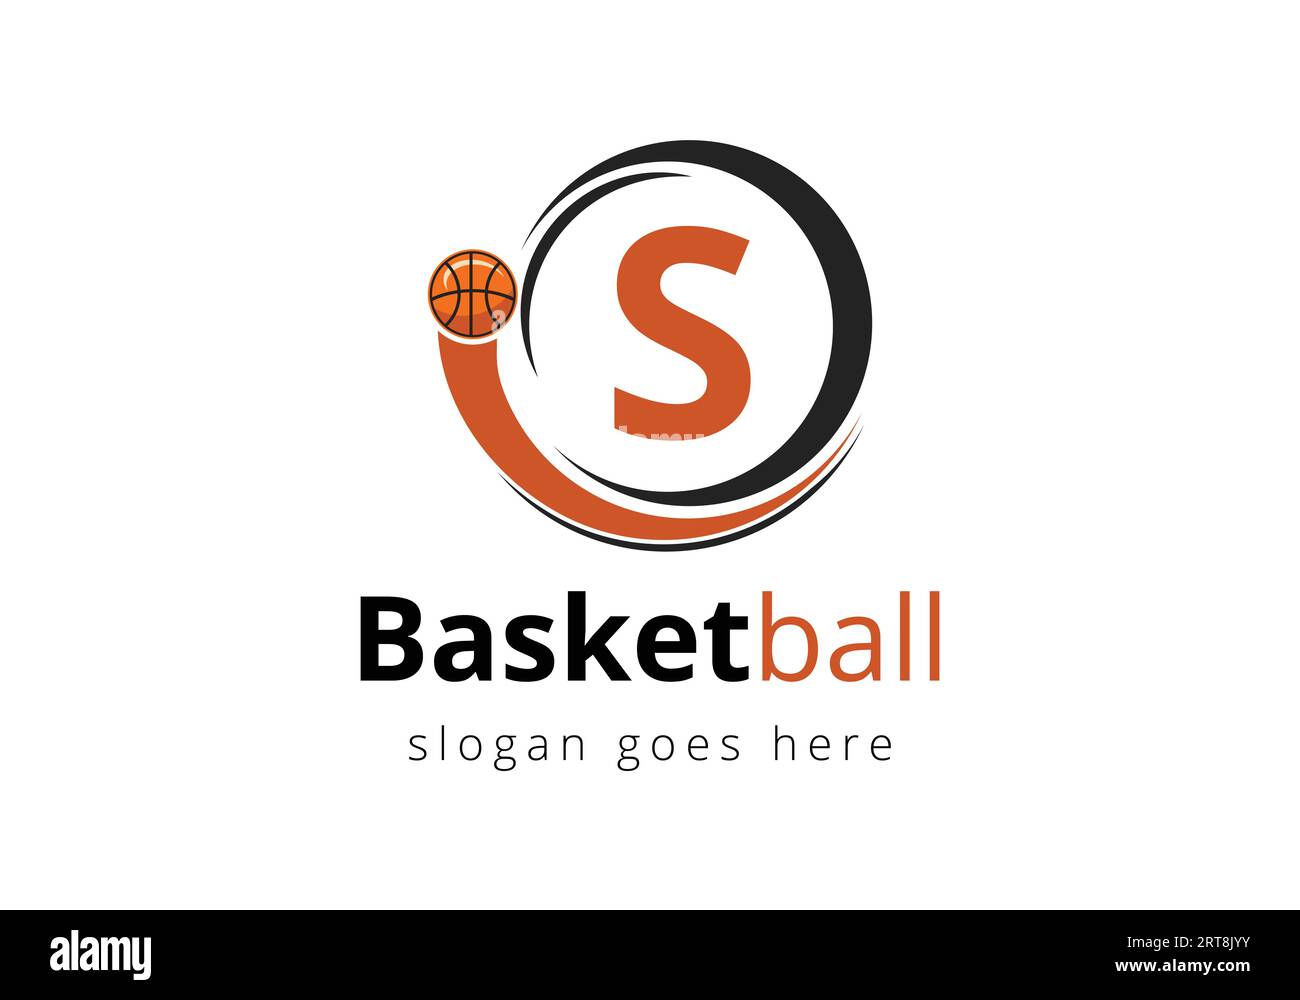 basketball design ideas